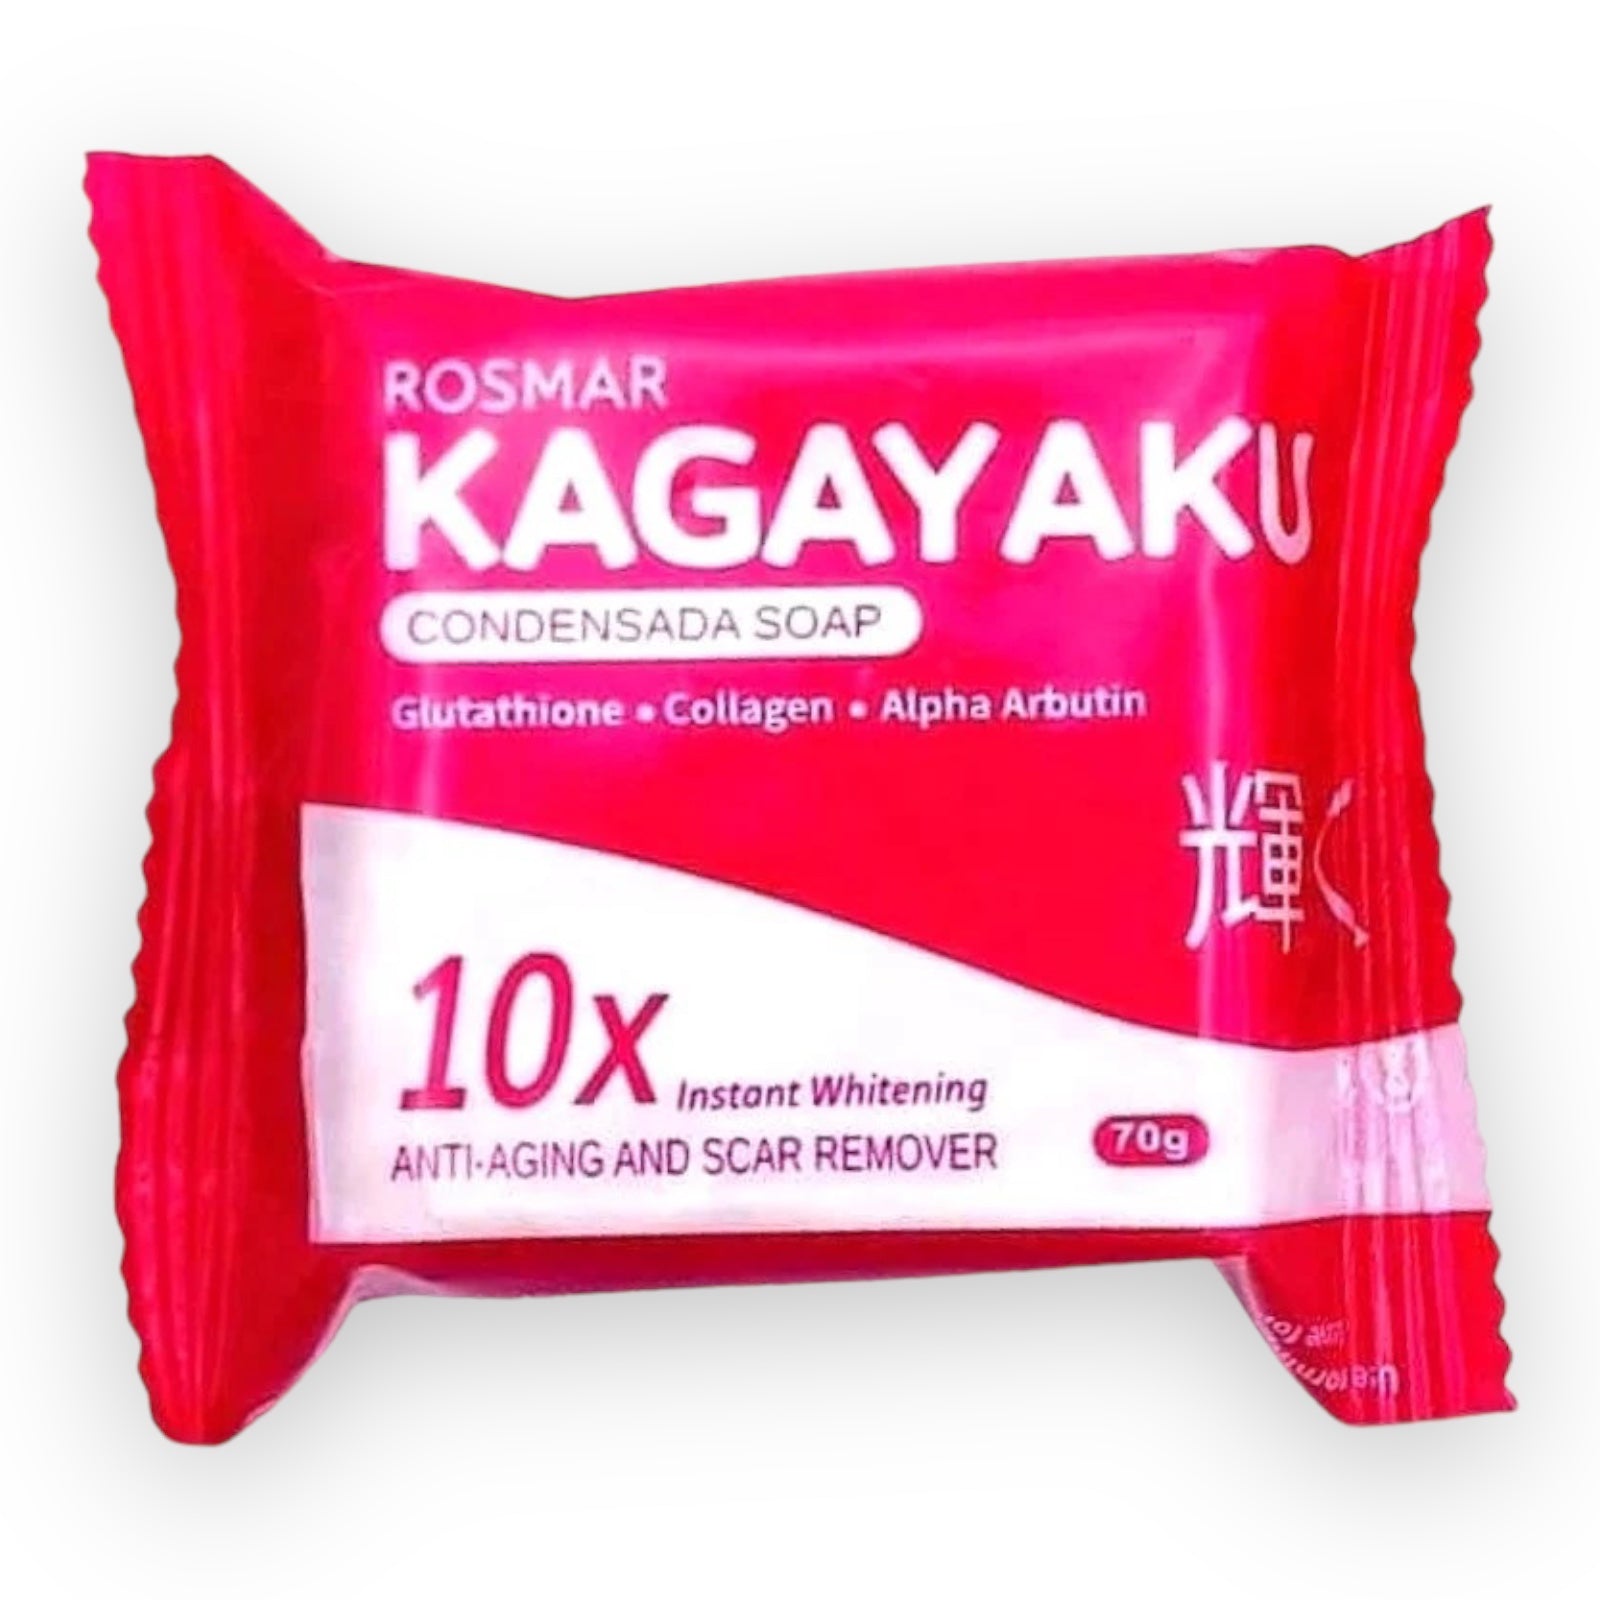 Rosmar - Kagayaku Whitening Soap Condense Milk Scent 70g - ( White & Red mix bar soap )